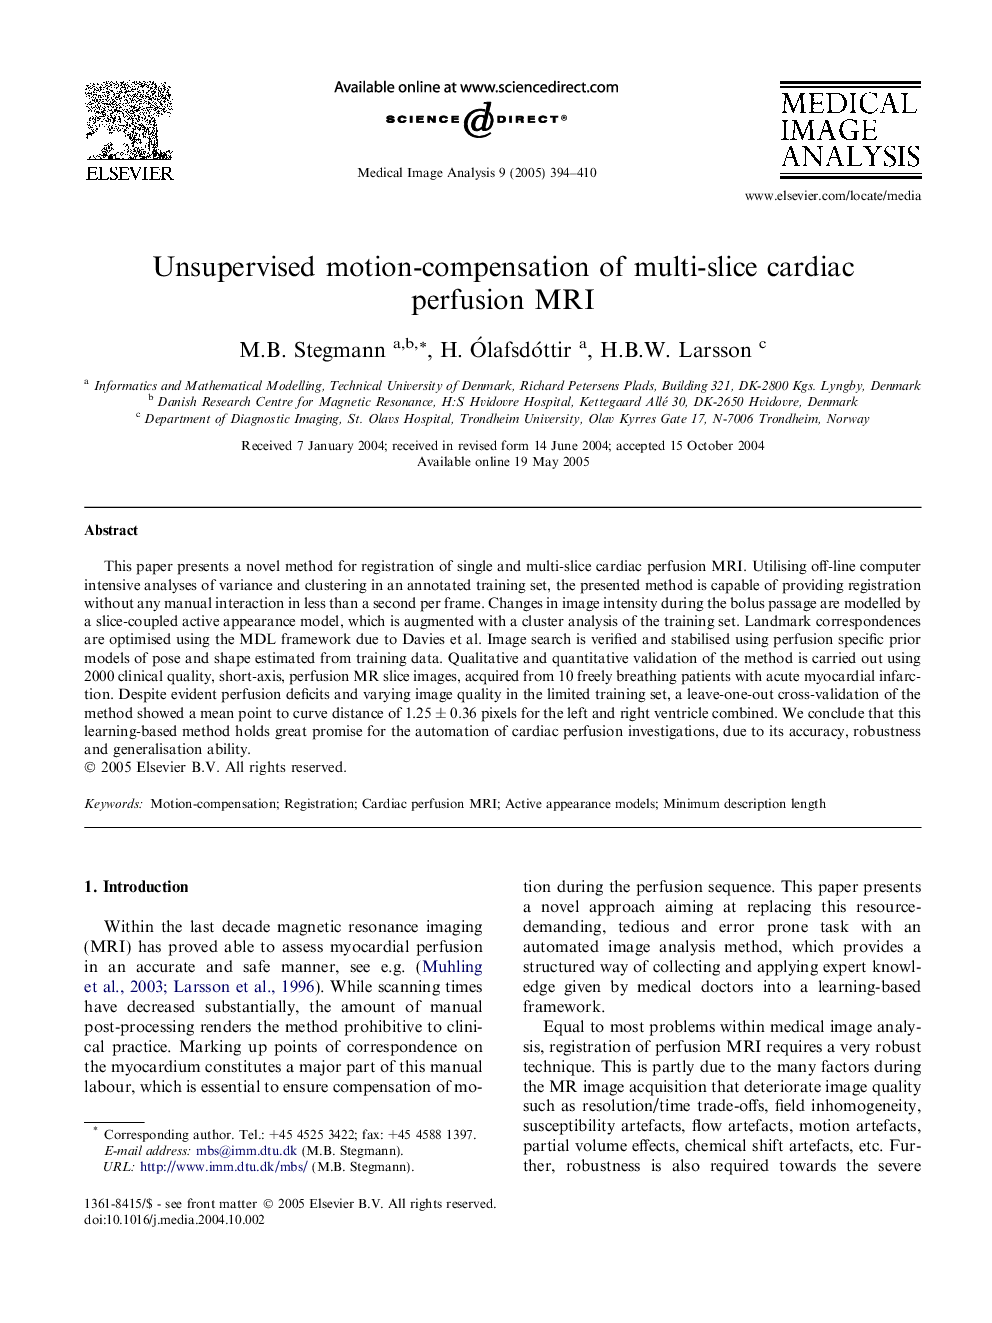 Unsupervised motion-compensation of multi-slice cardiac perfusion MRI